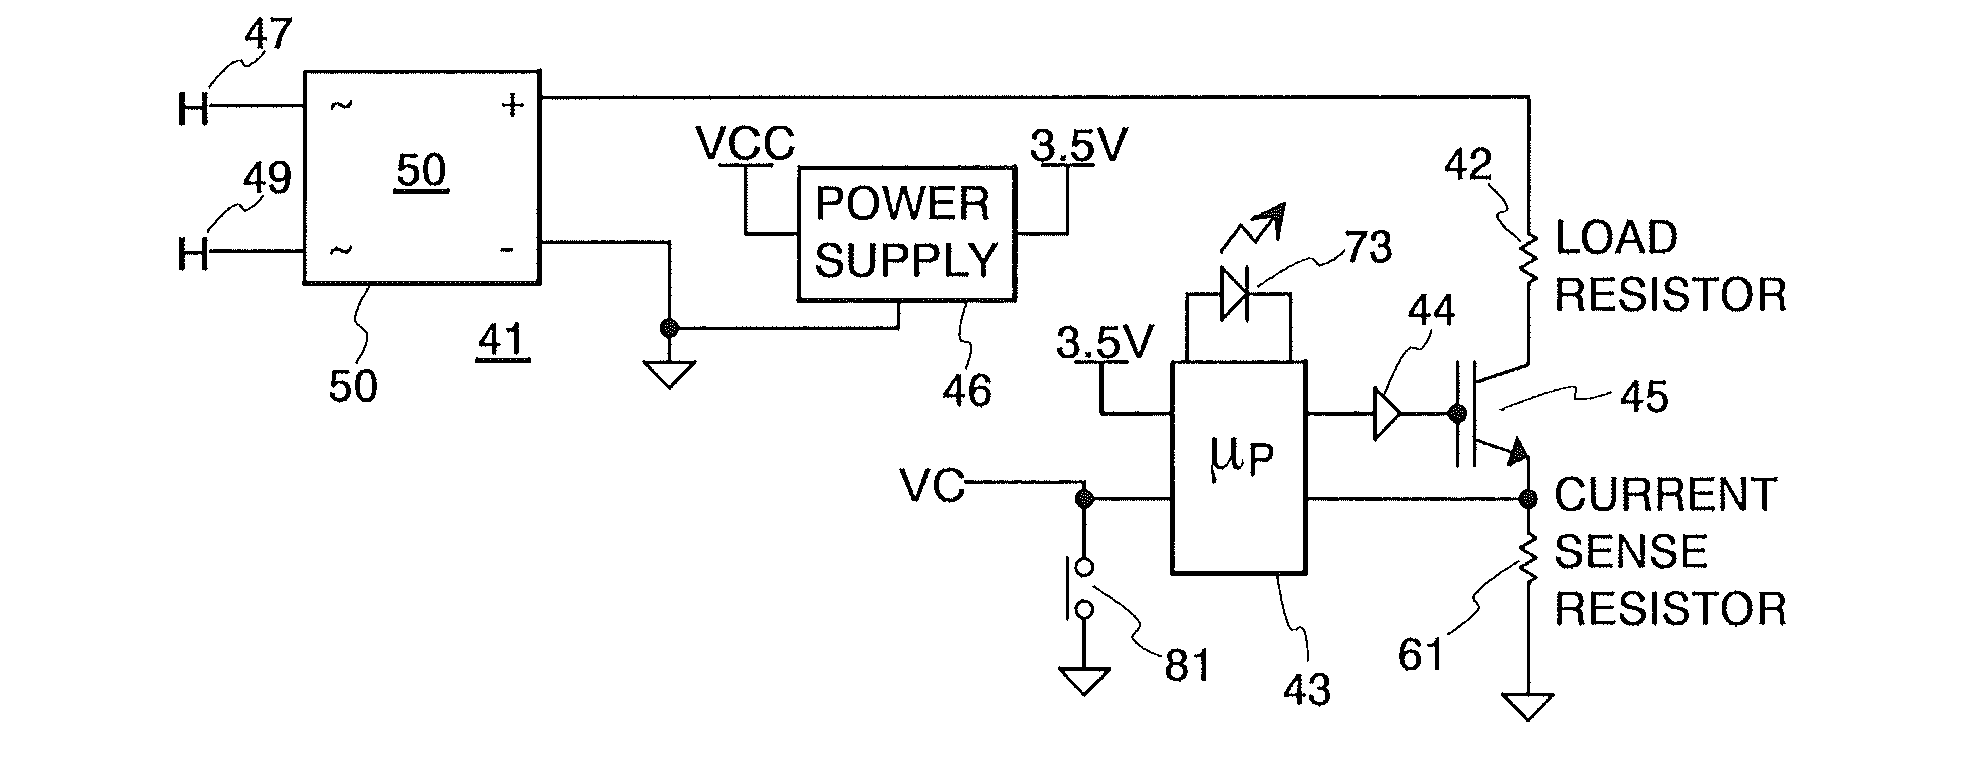 Reliable Arc Fault Circuit Interrupter Tester Utilizing A Dynamic Fault Voltage